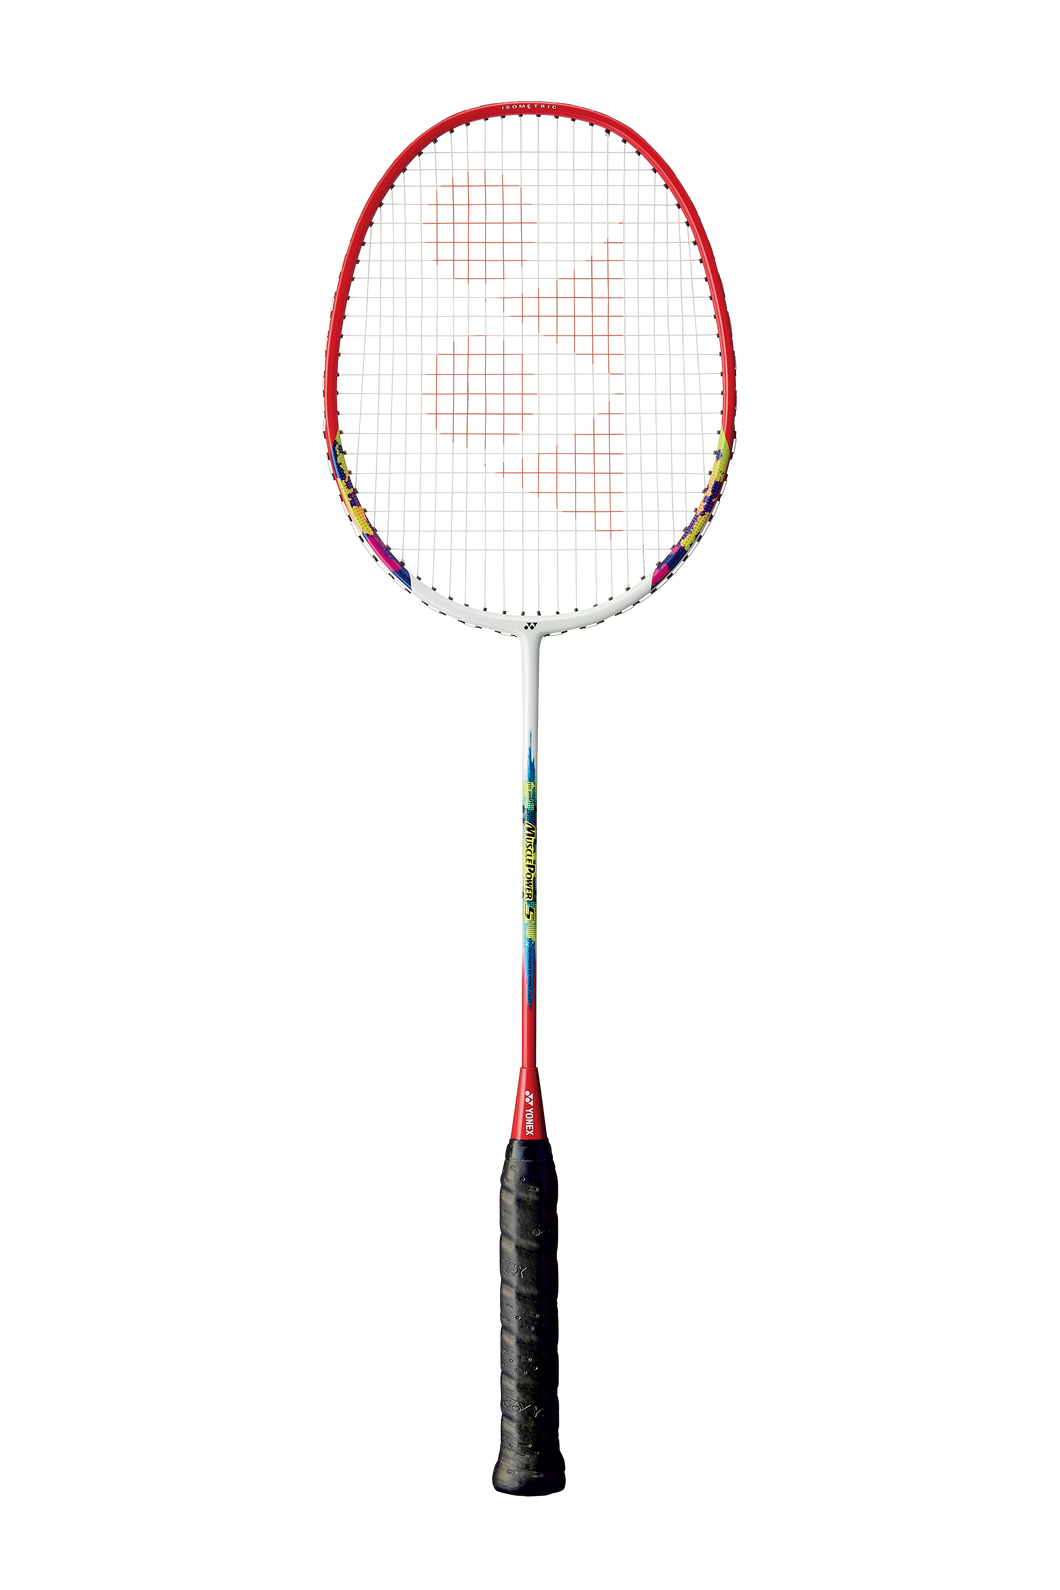 Yonex Muscle Power 5 Badminton Racket